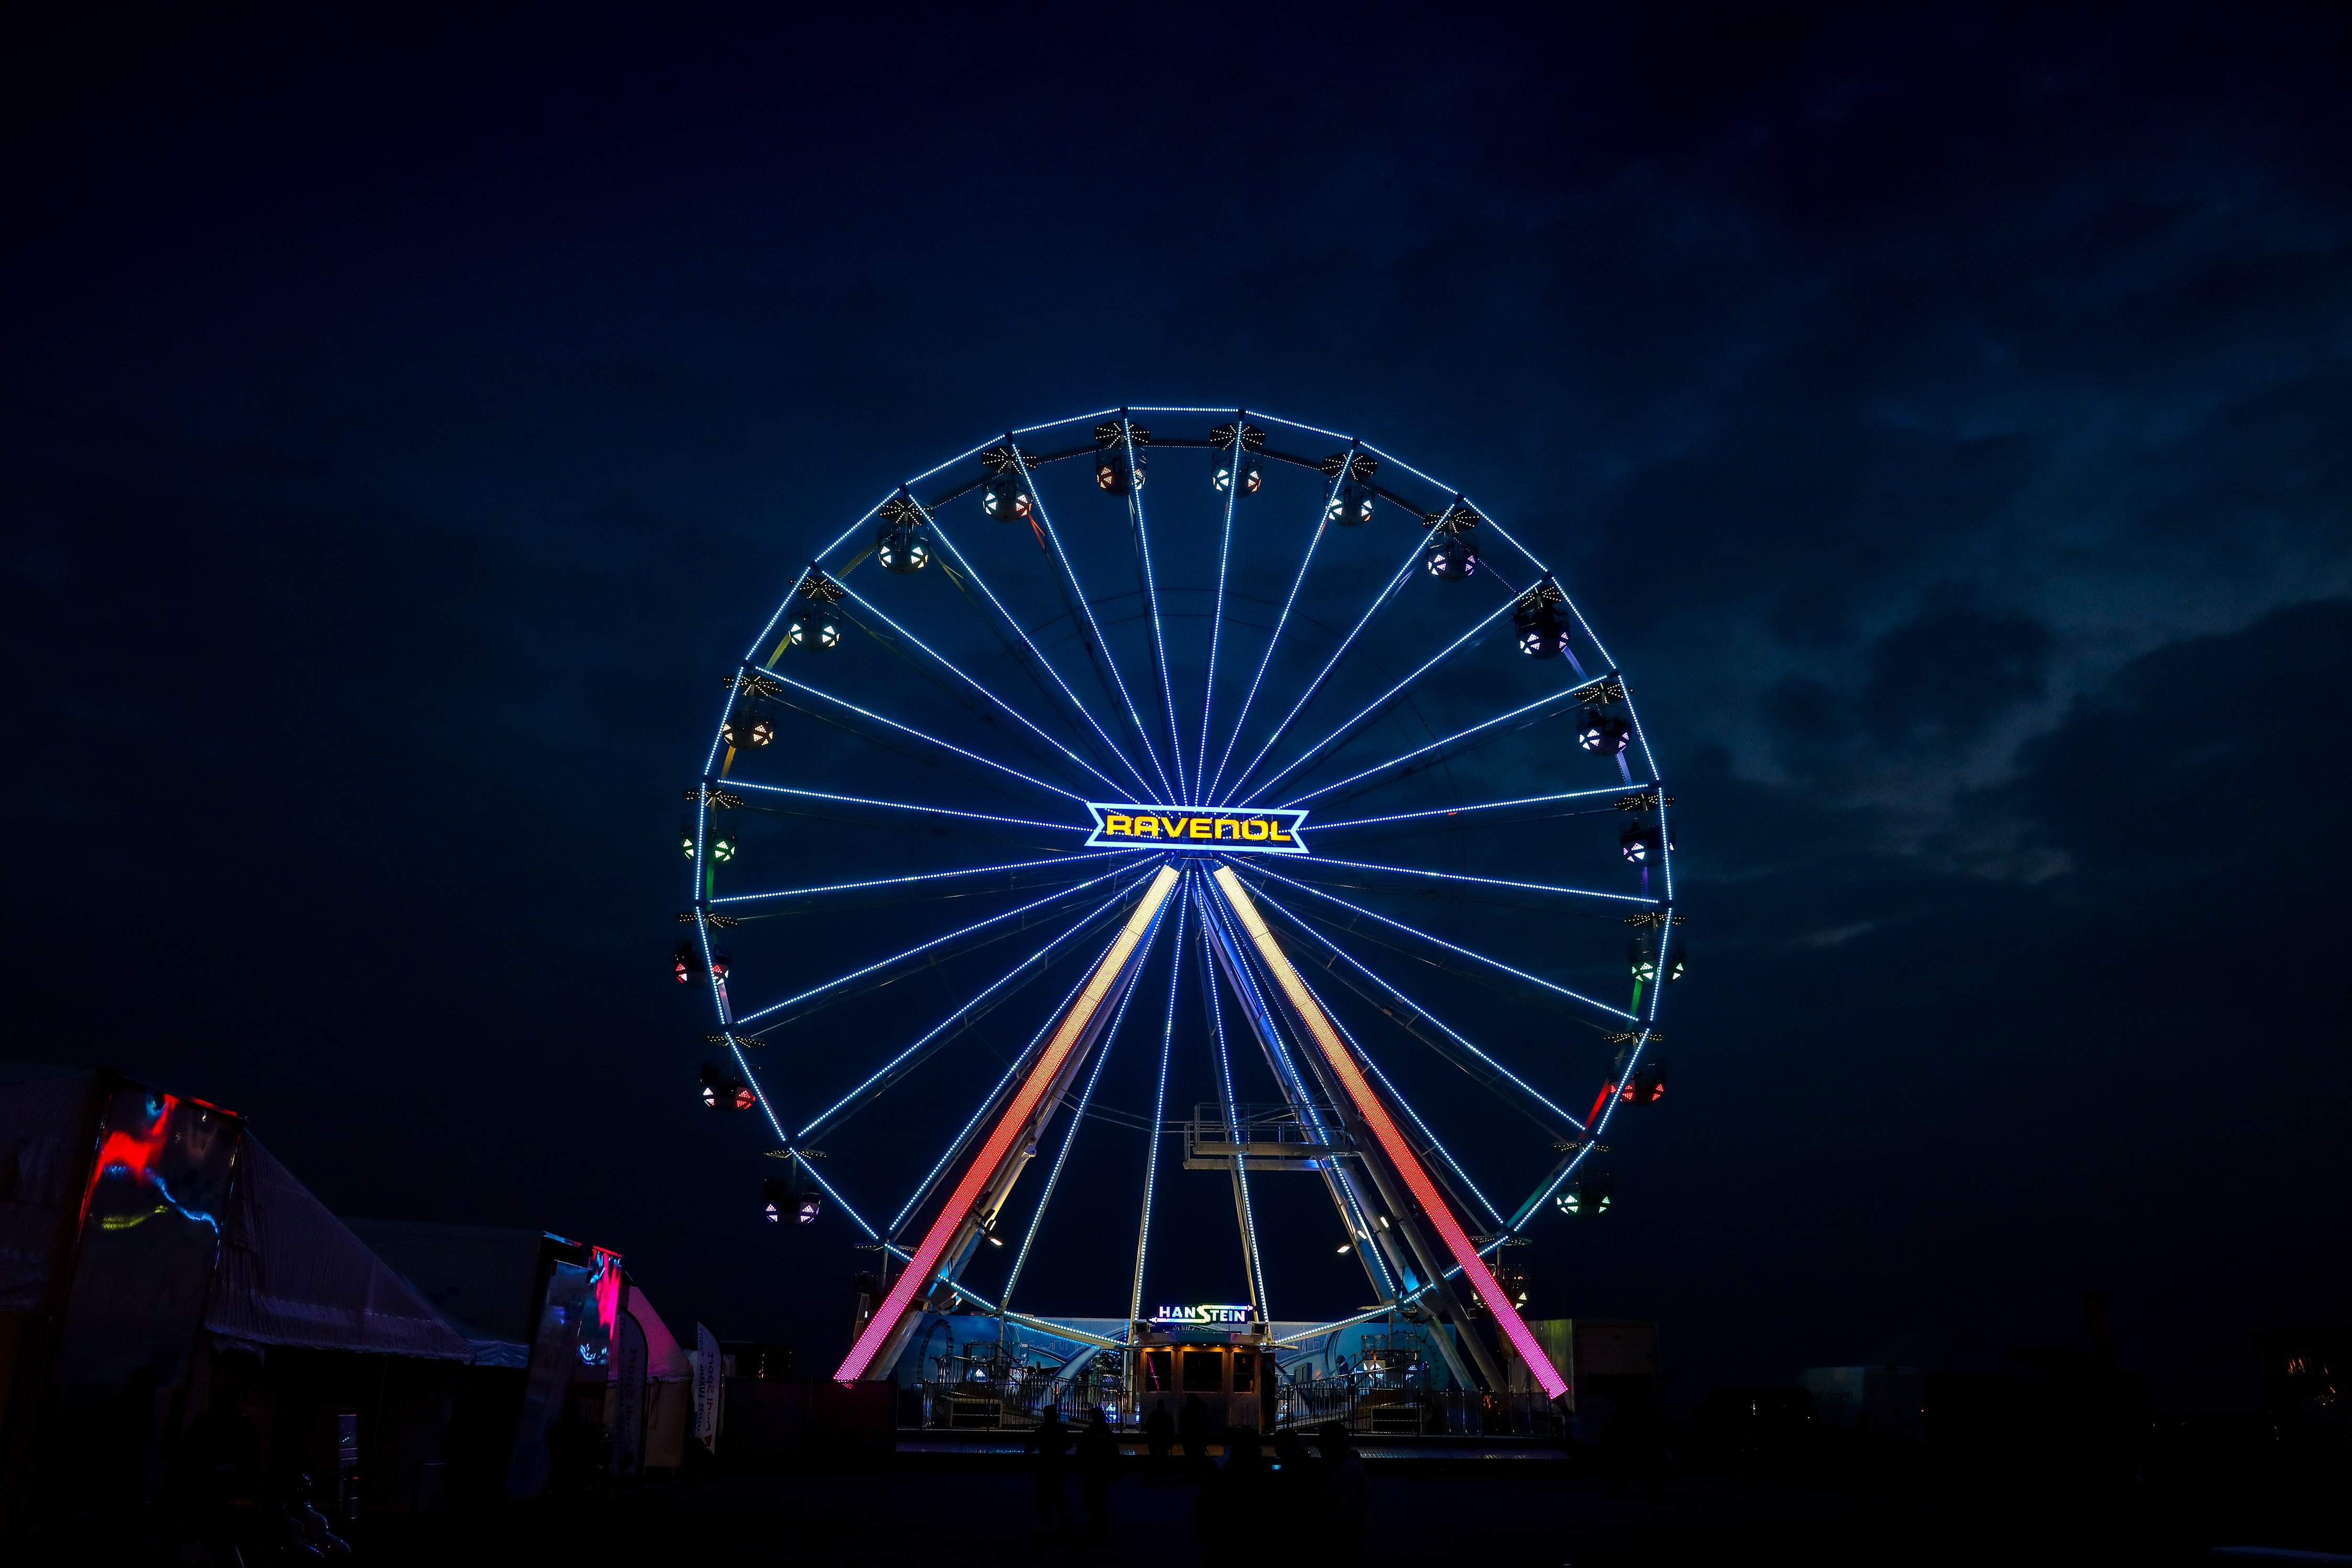 The RAVENOL Ferris Wheel at the Nürburgring